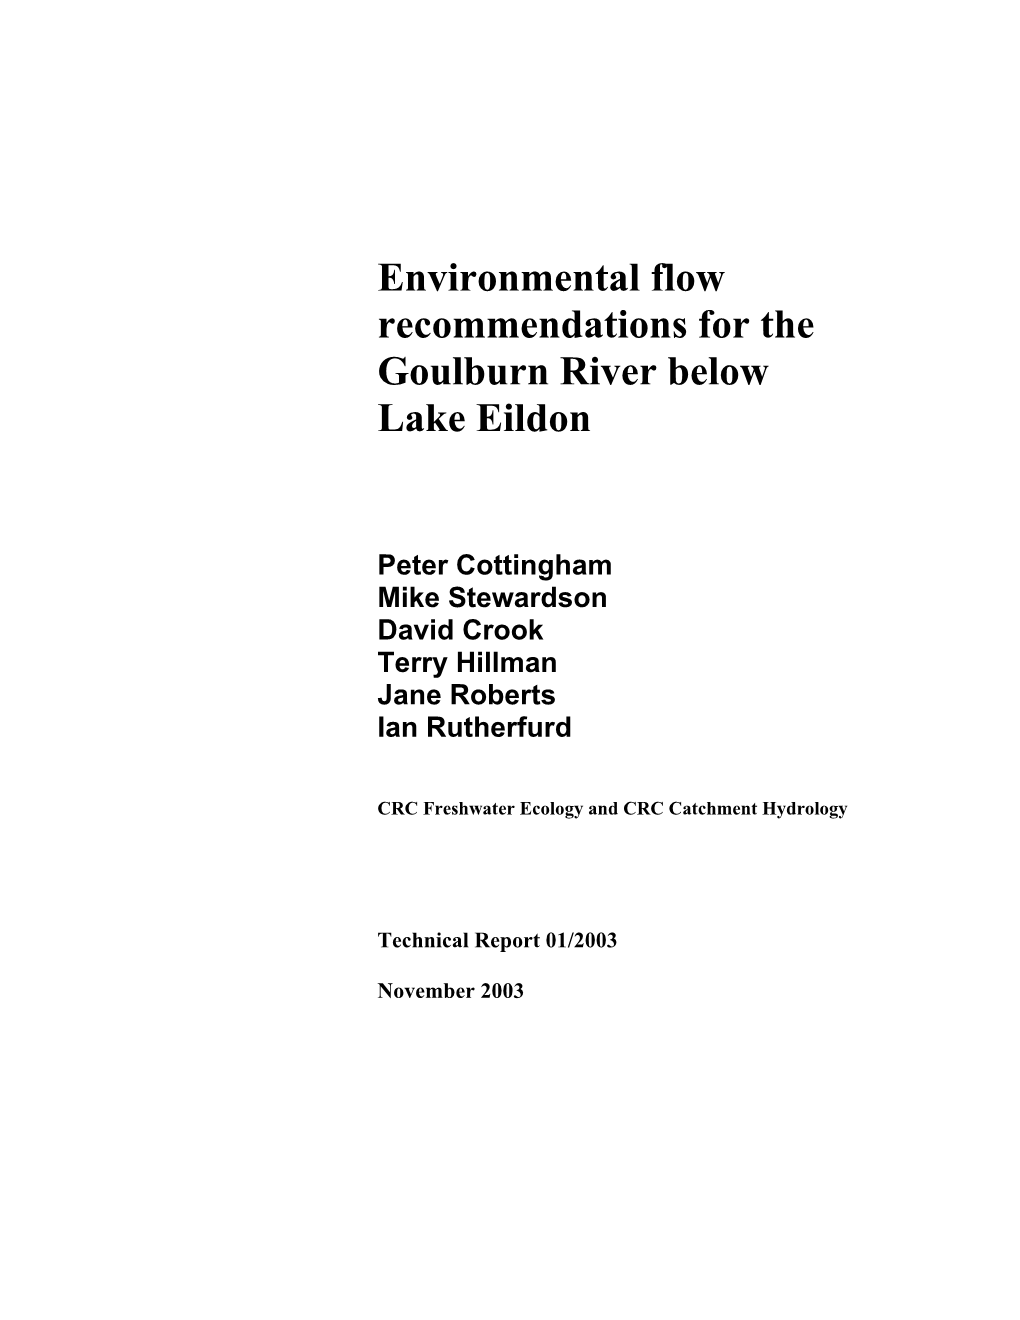 Environmental Flow Recommendations for the Goulburn River Below Lake Eildon